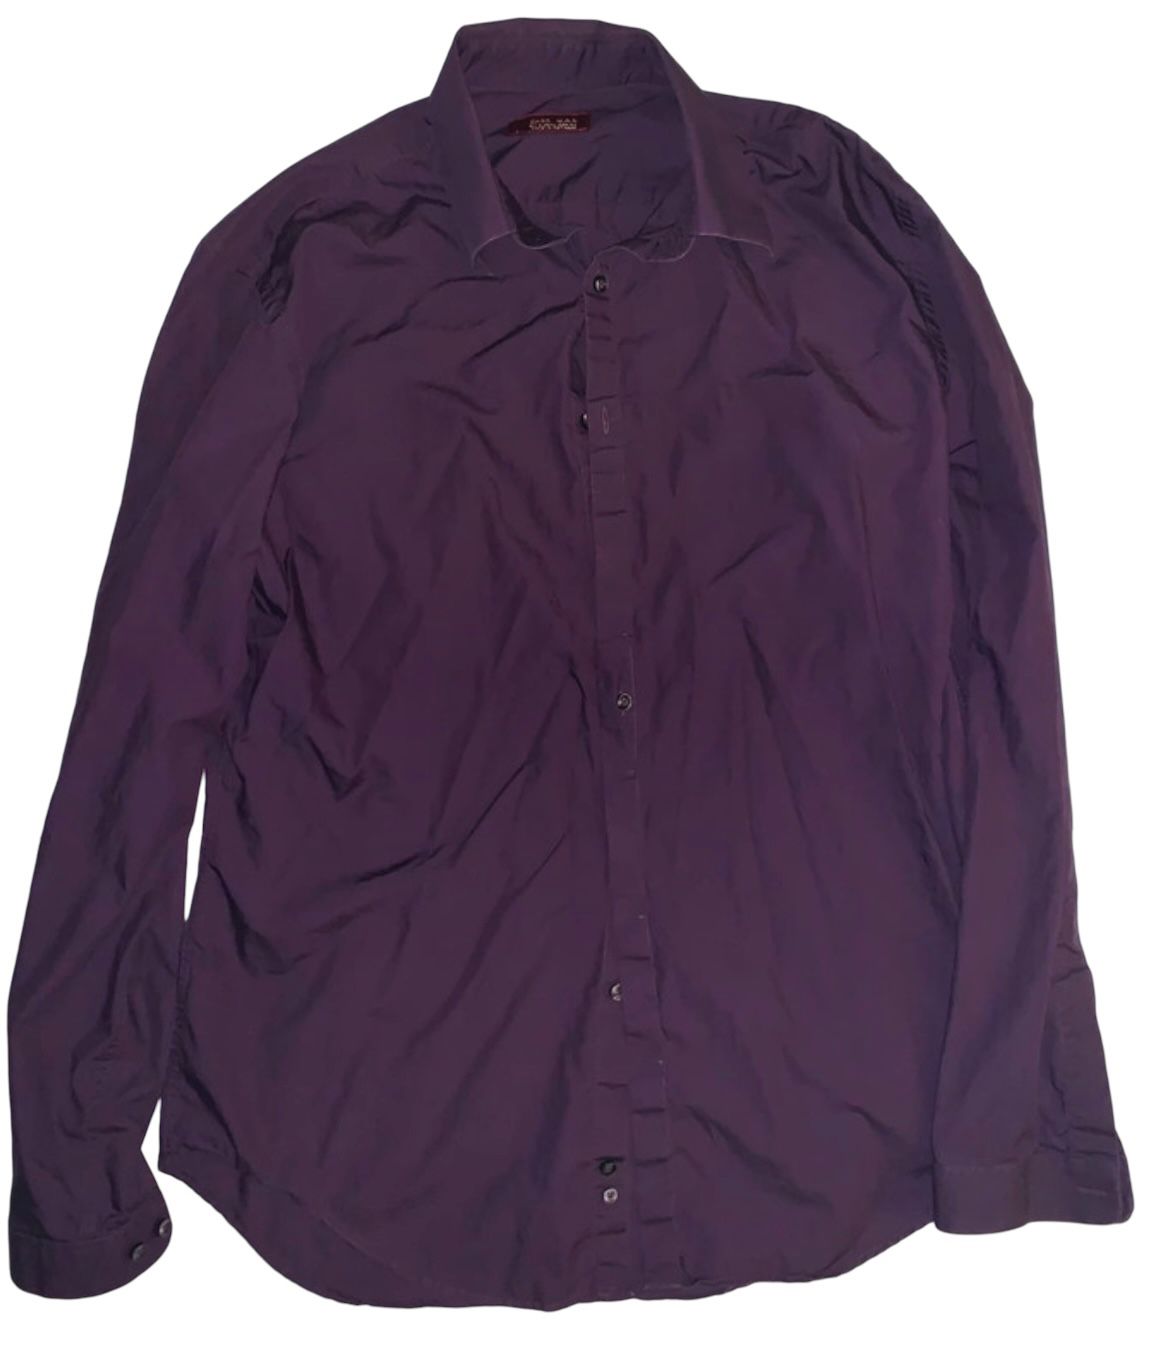 Zara Man Button Up Long Sleeve Purple Dress Shirt Size Large